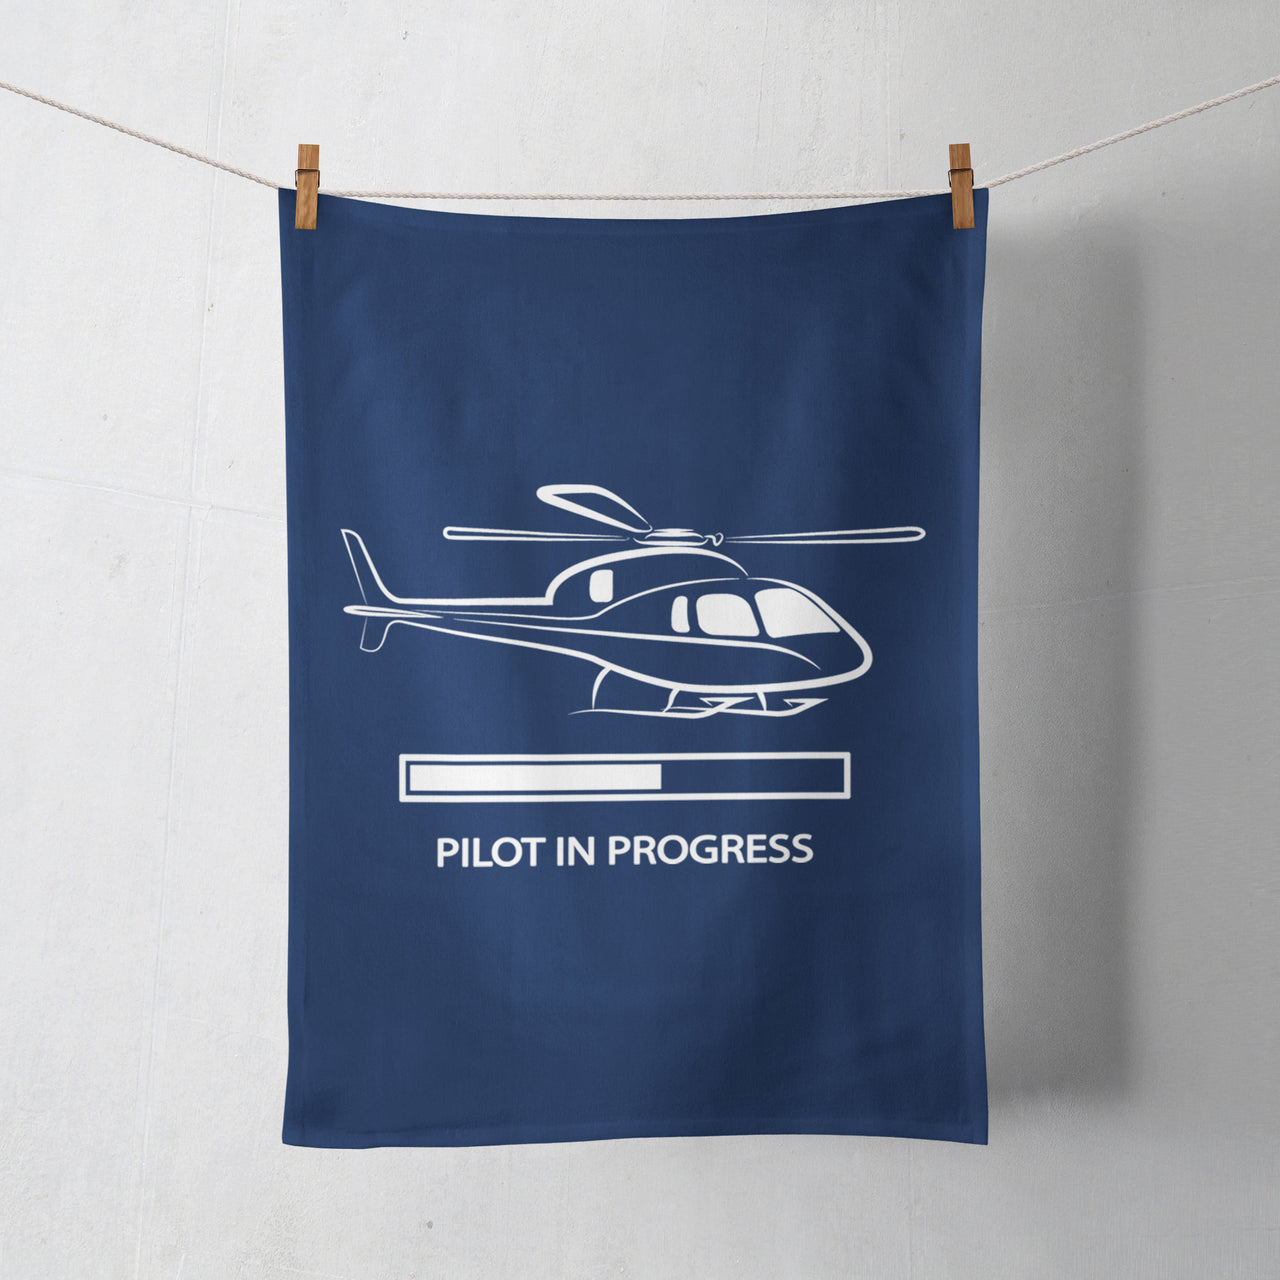 Pilot In Progress (Helicopter) Designed Towels